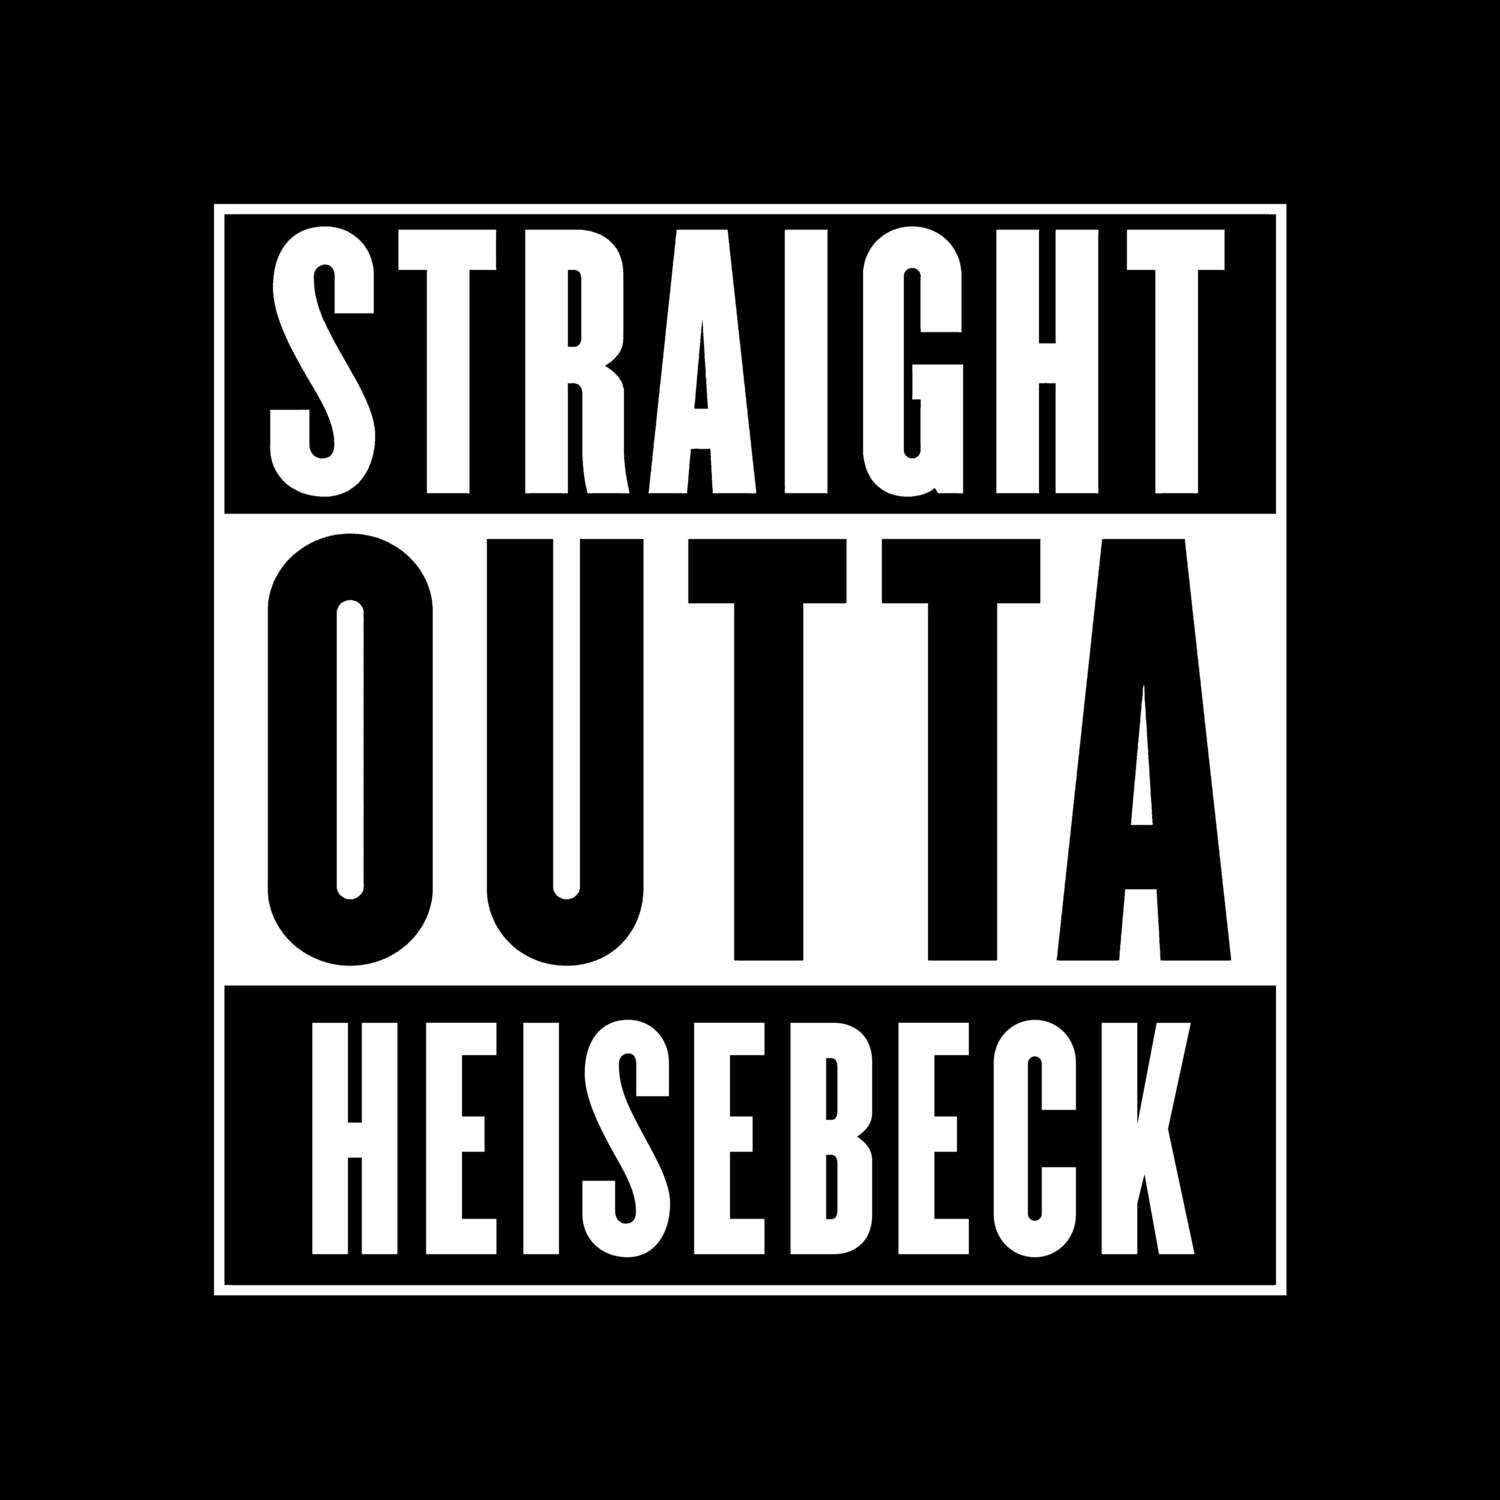 Heisebeck T-Shirt »Straight Outta«